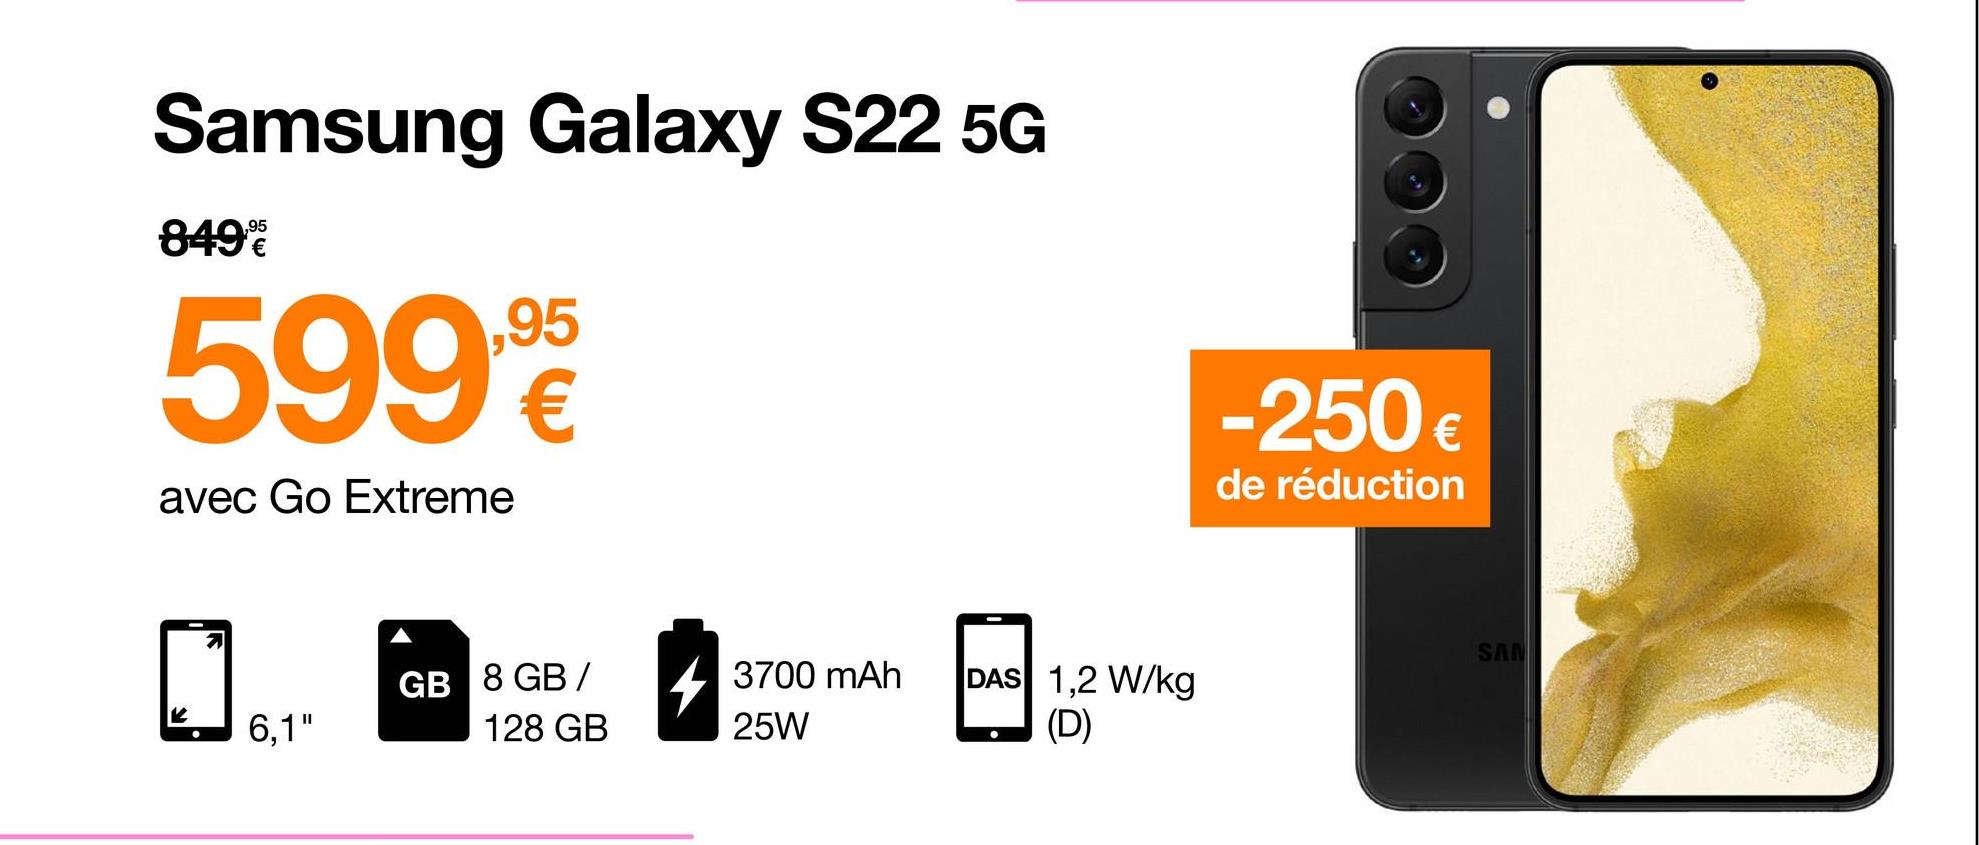 Samsung Galaxy S22 5G
,95
849%
5998
€
avec Go Extreme
-250€
de réduction
SAN
GB 8 GB /
3700 mAh
25W
DAS 1,2 W/kg
(D)
6,1"
128 GB
